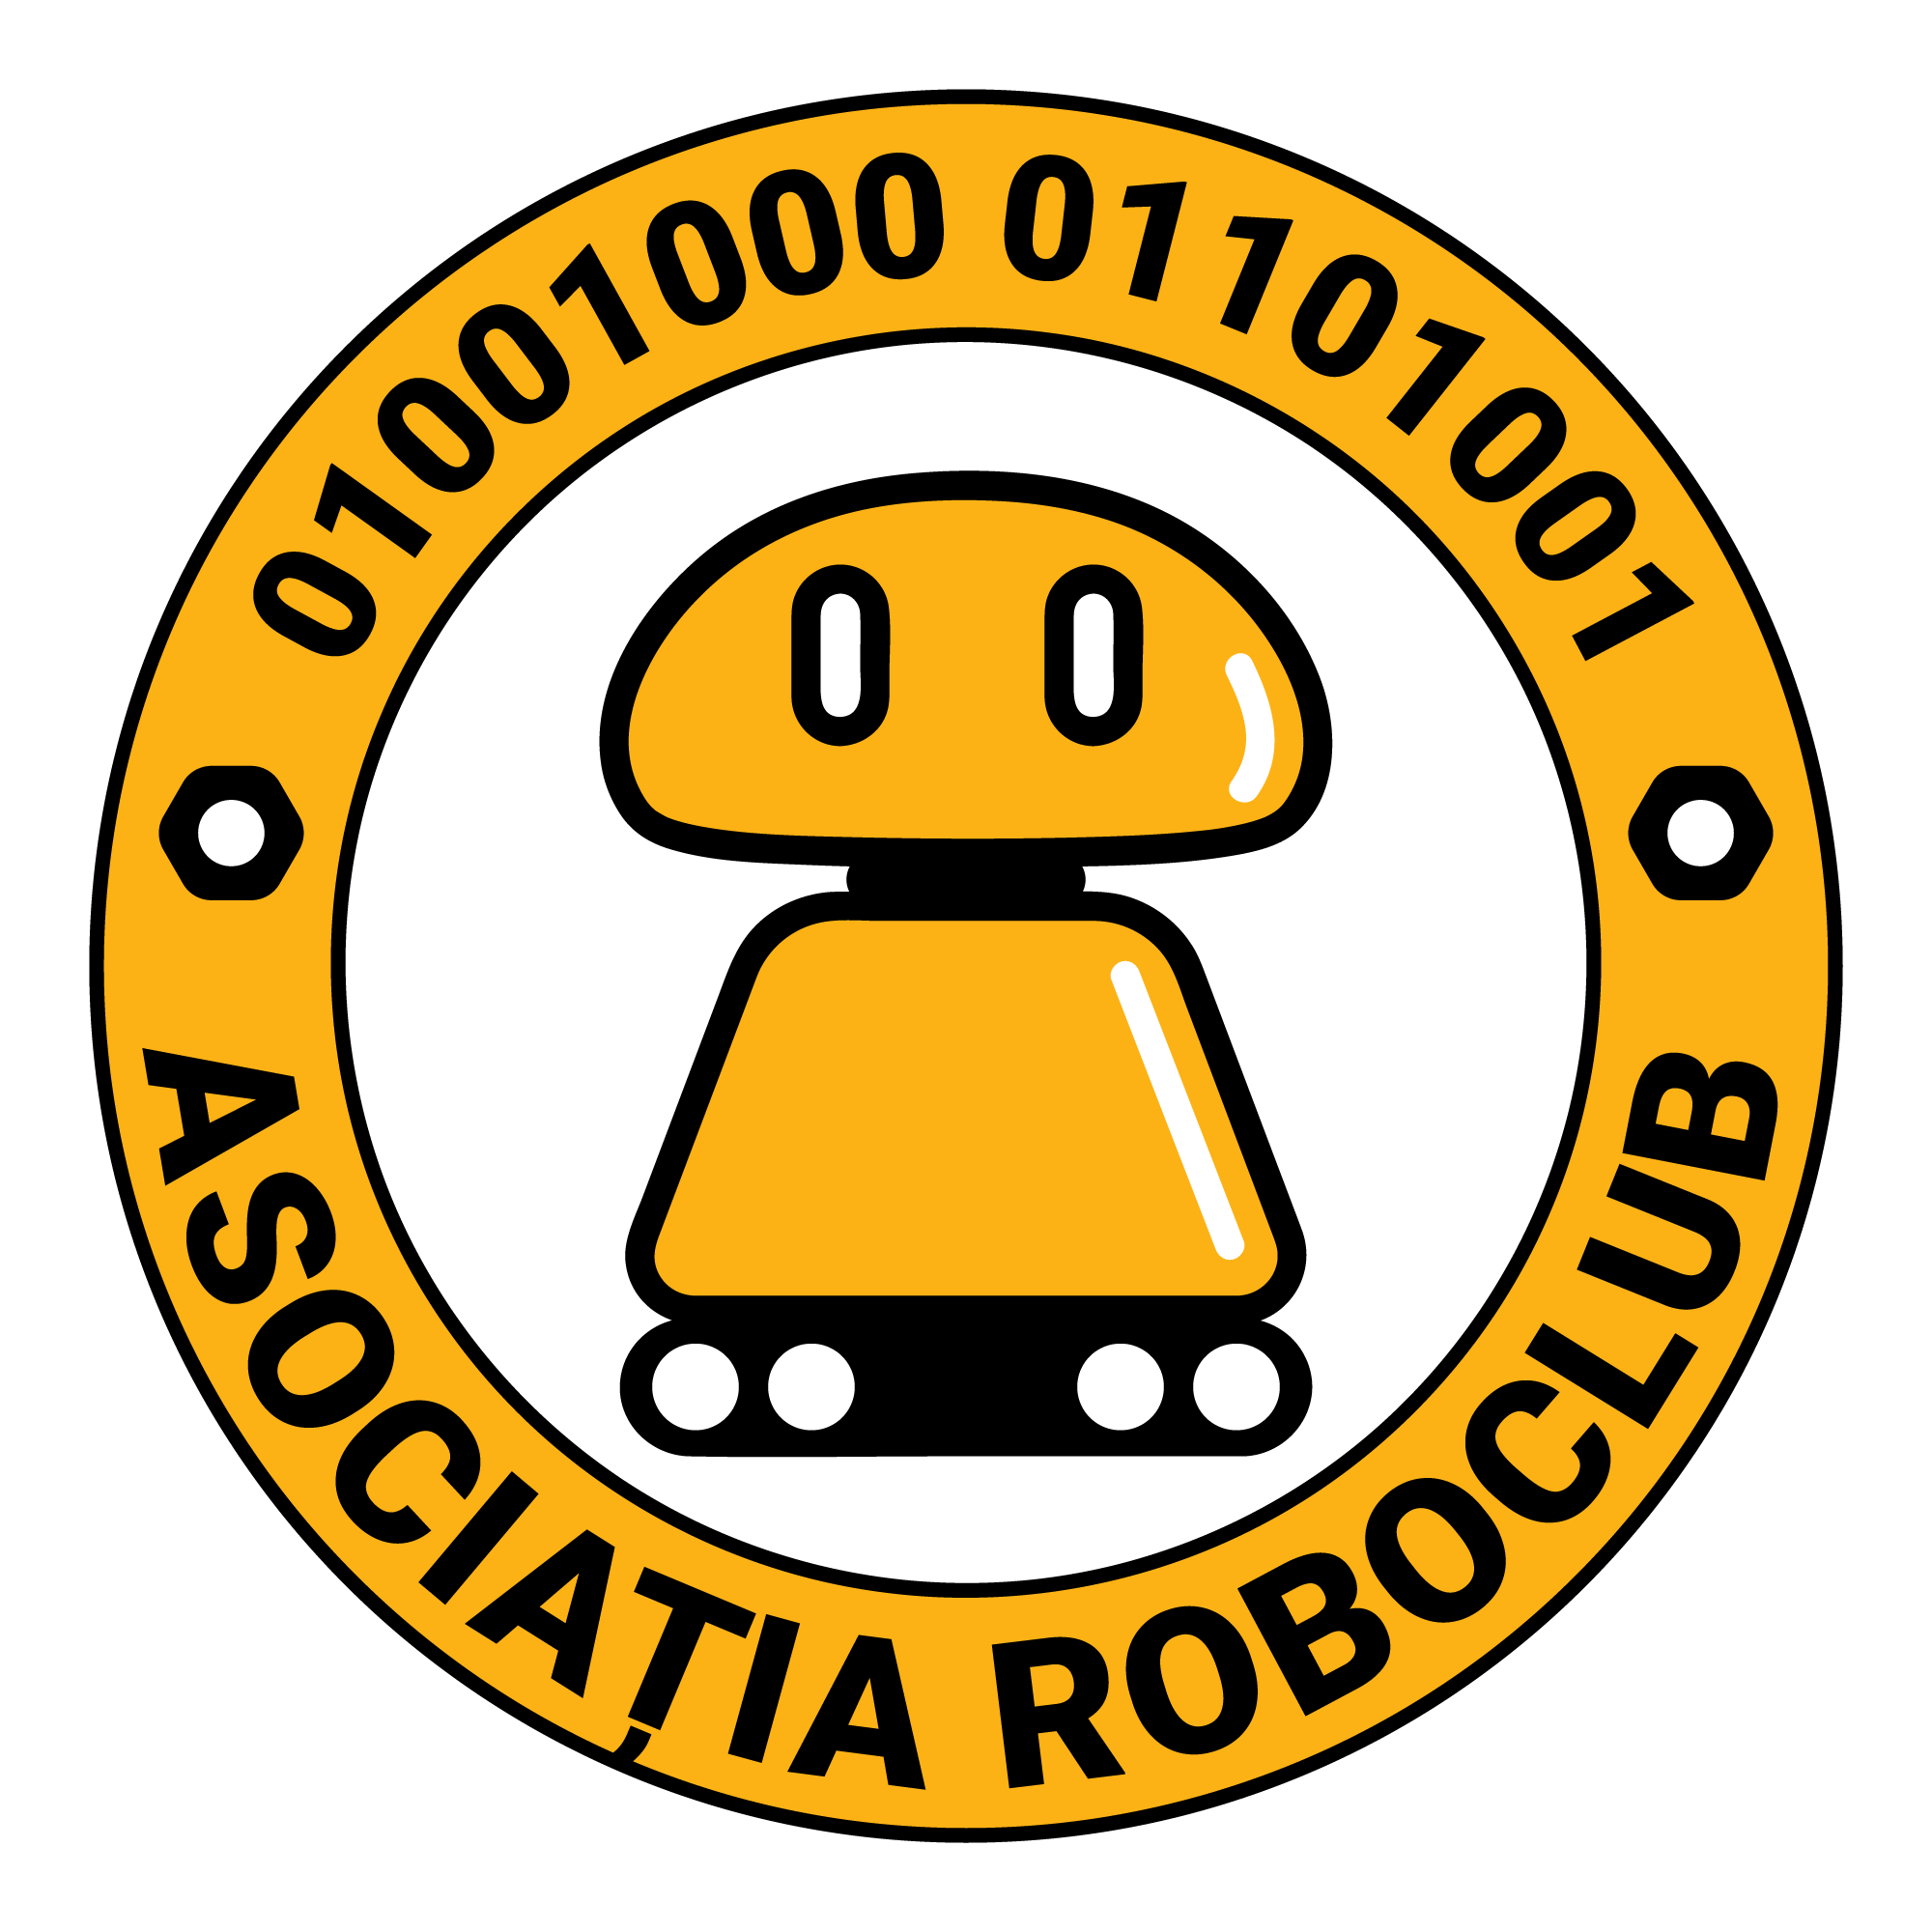 Asociatia Roboclub logo